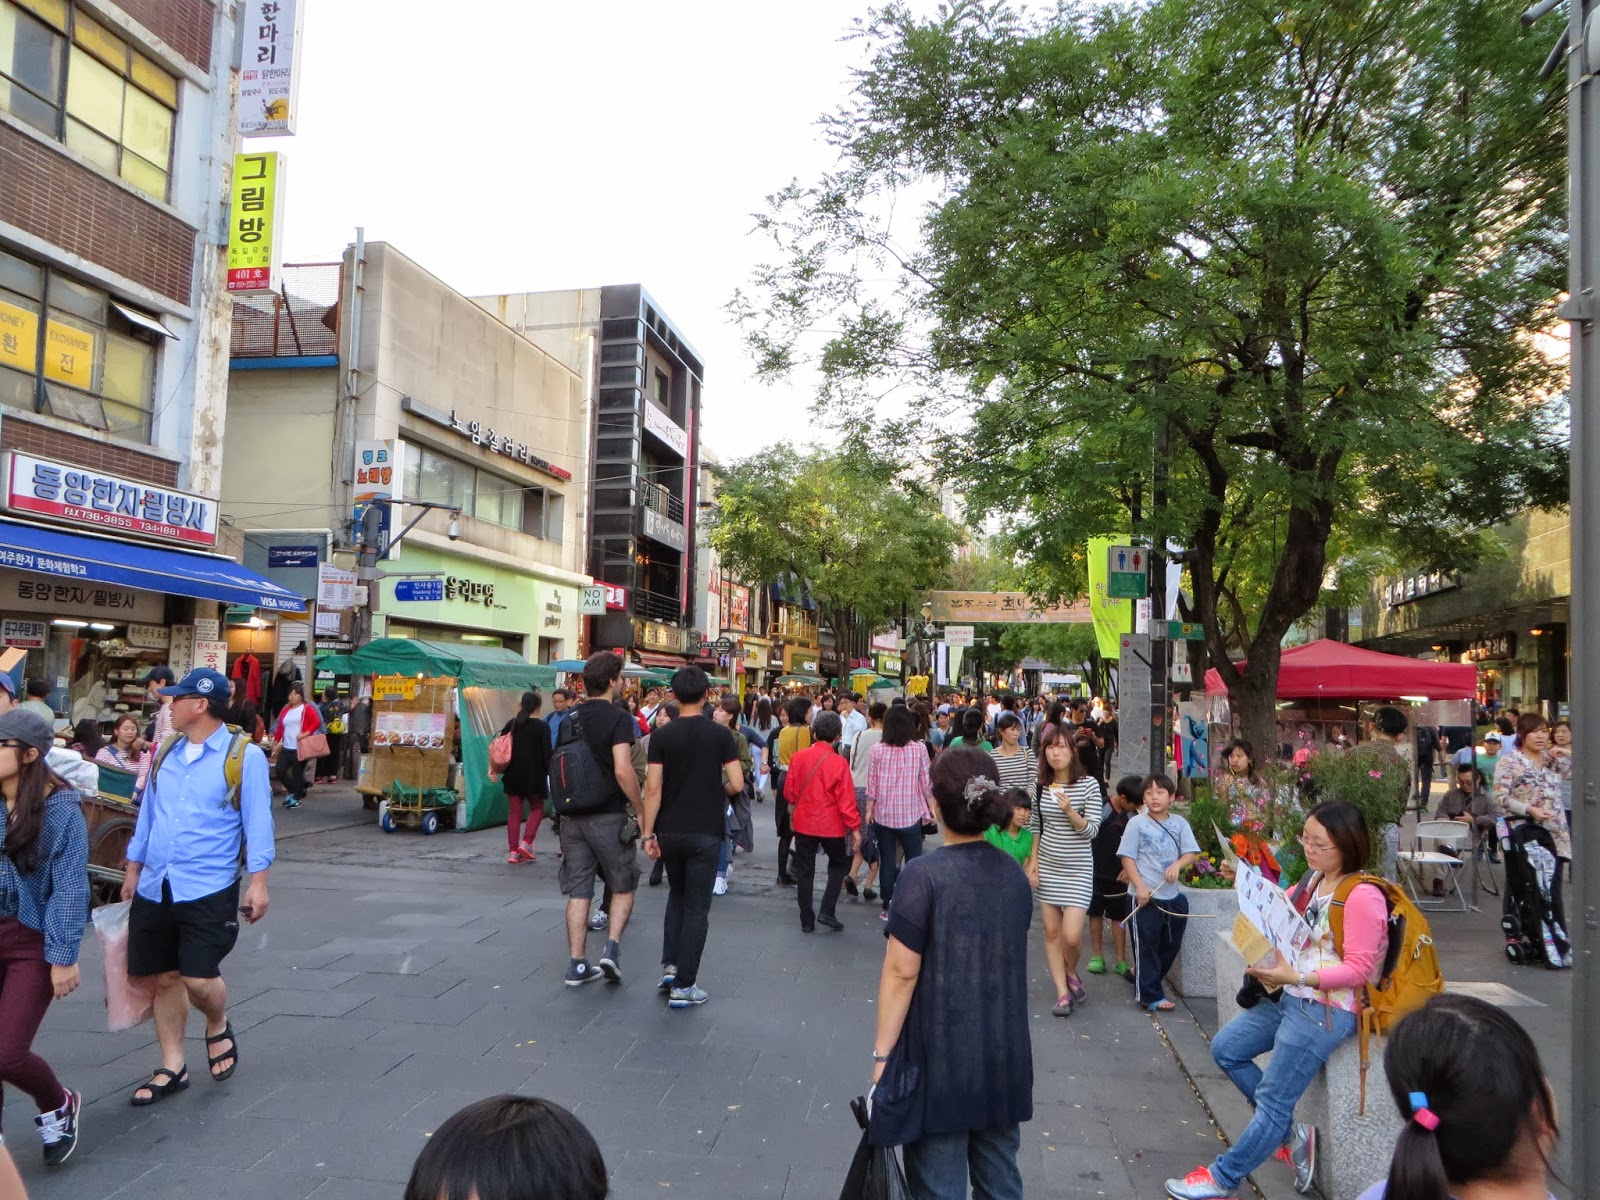 My Remodeled Life: Seoul - Day 4 Insadong Neighborhood